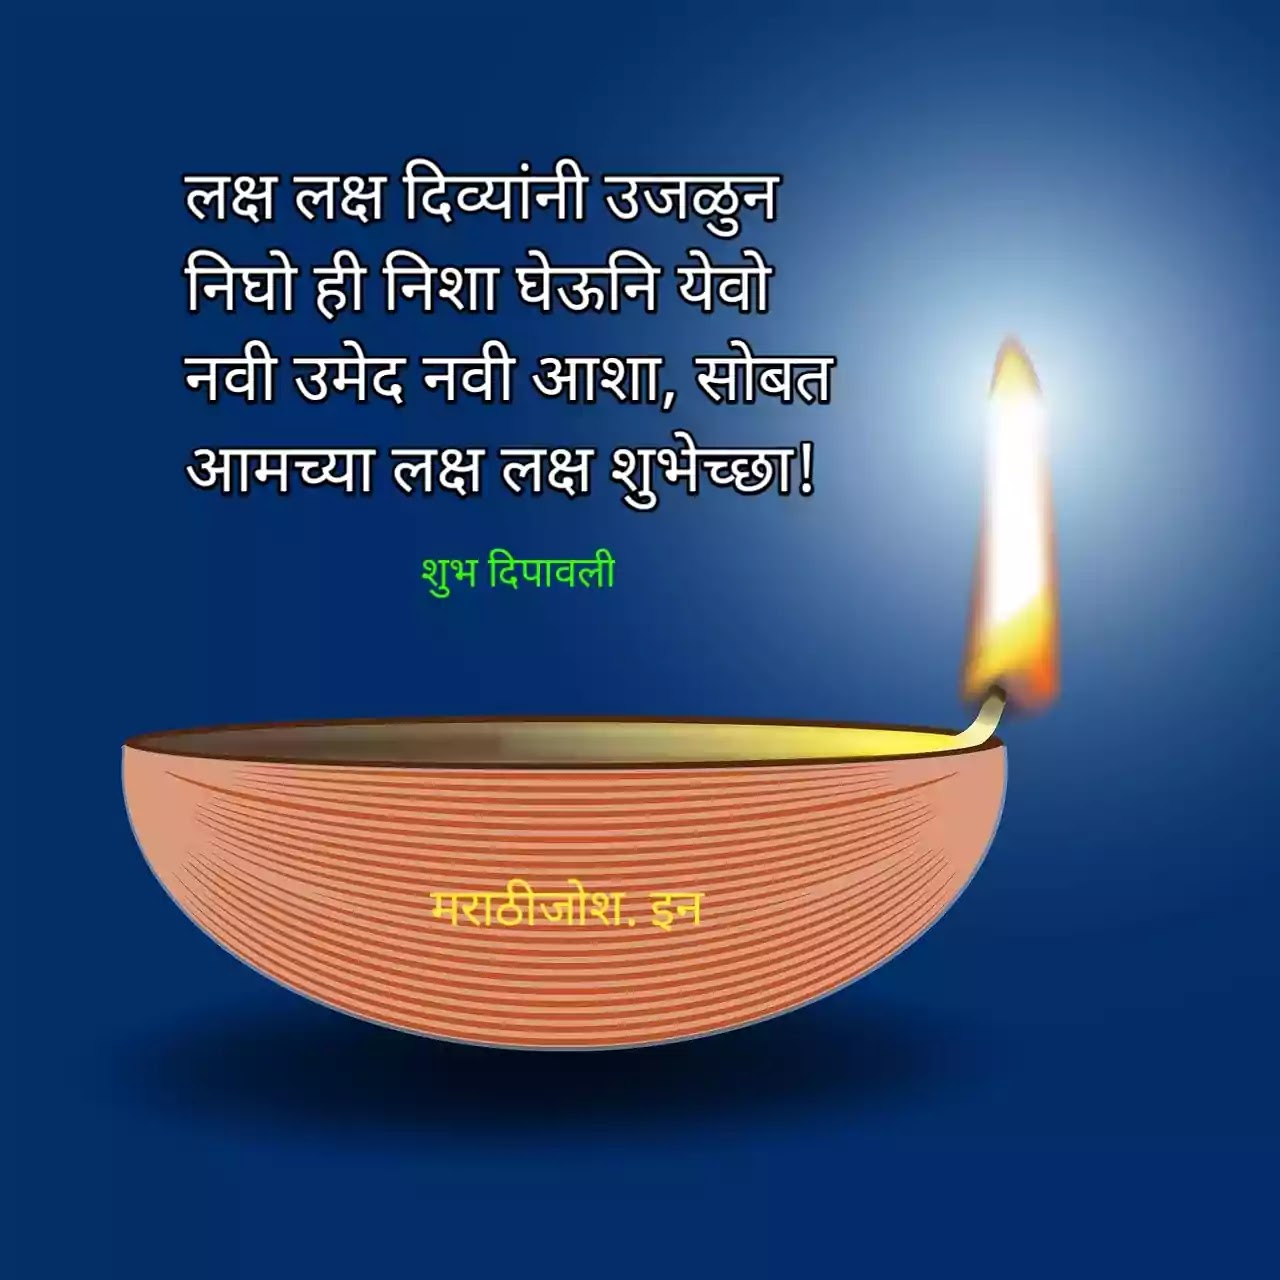 Diwali Wishes Images In Marathi